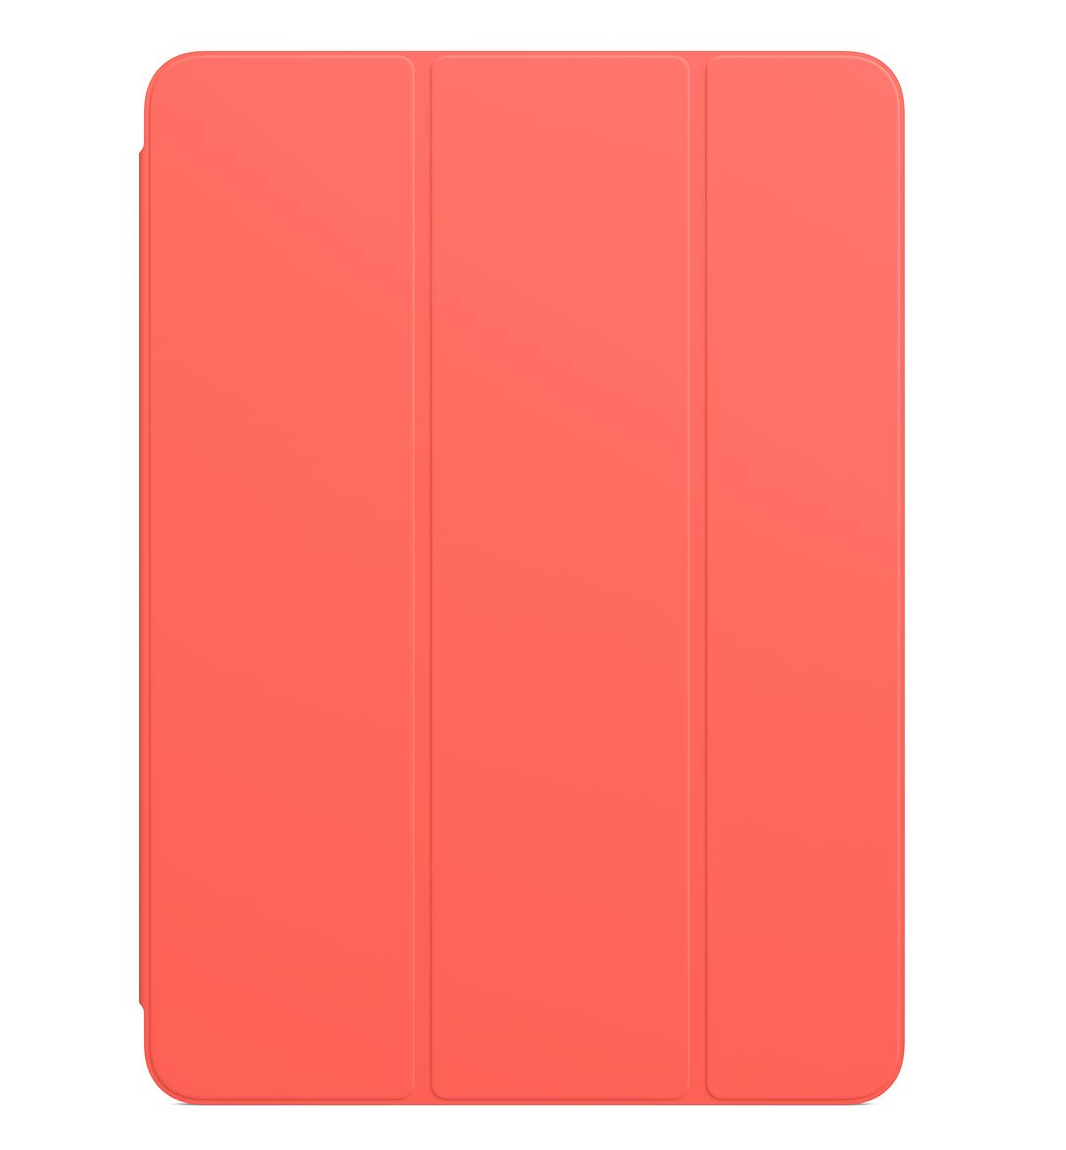 Smart Folio for iPad Pro 12.9-inch (4th Generation)